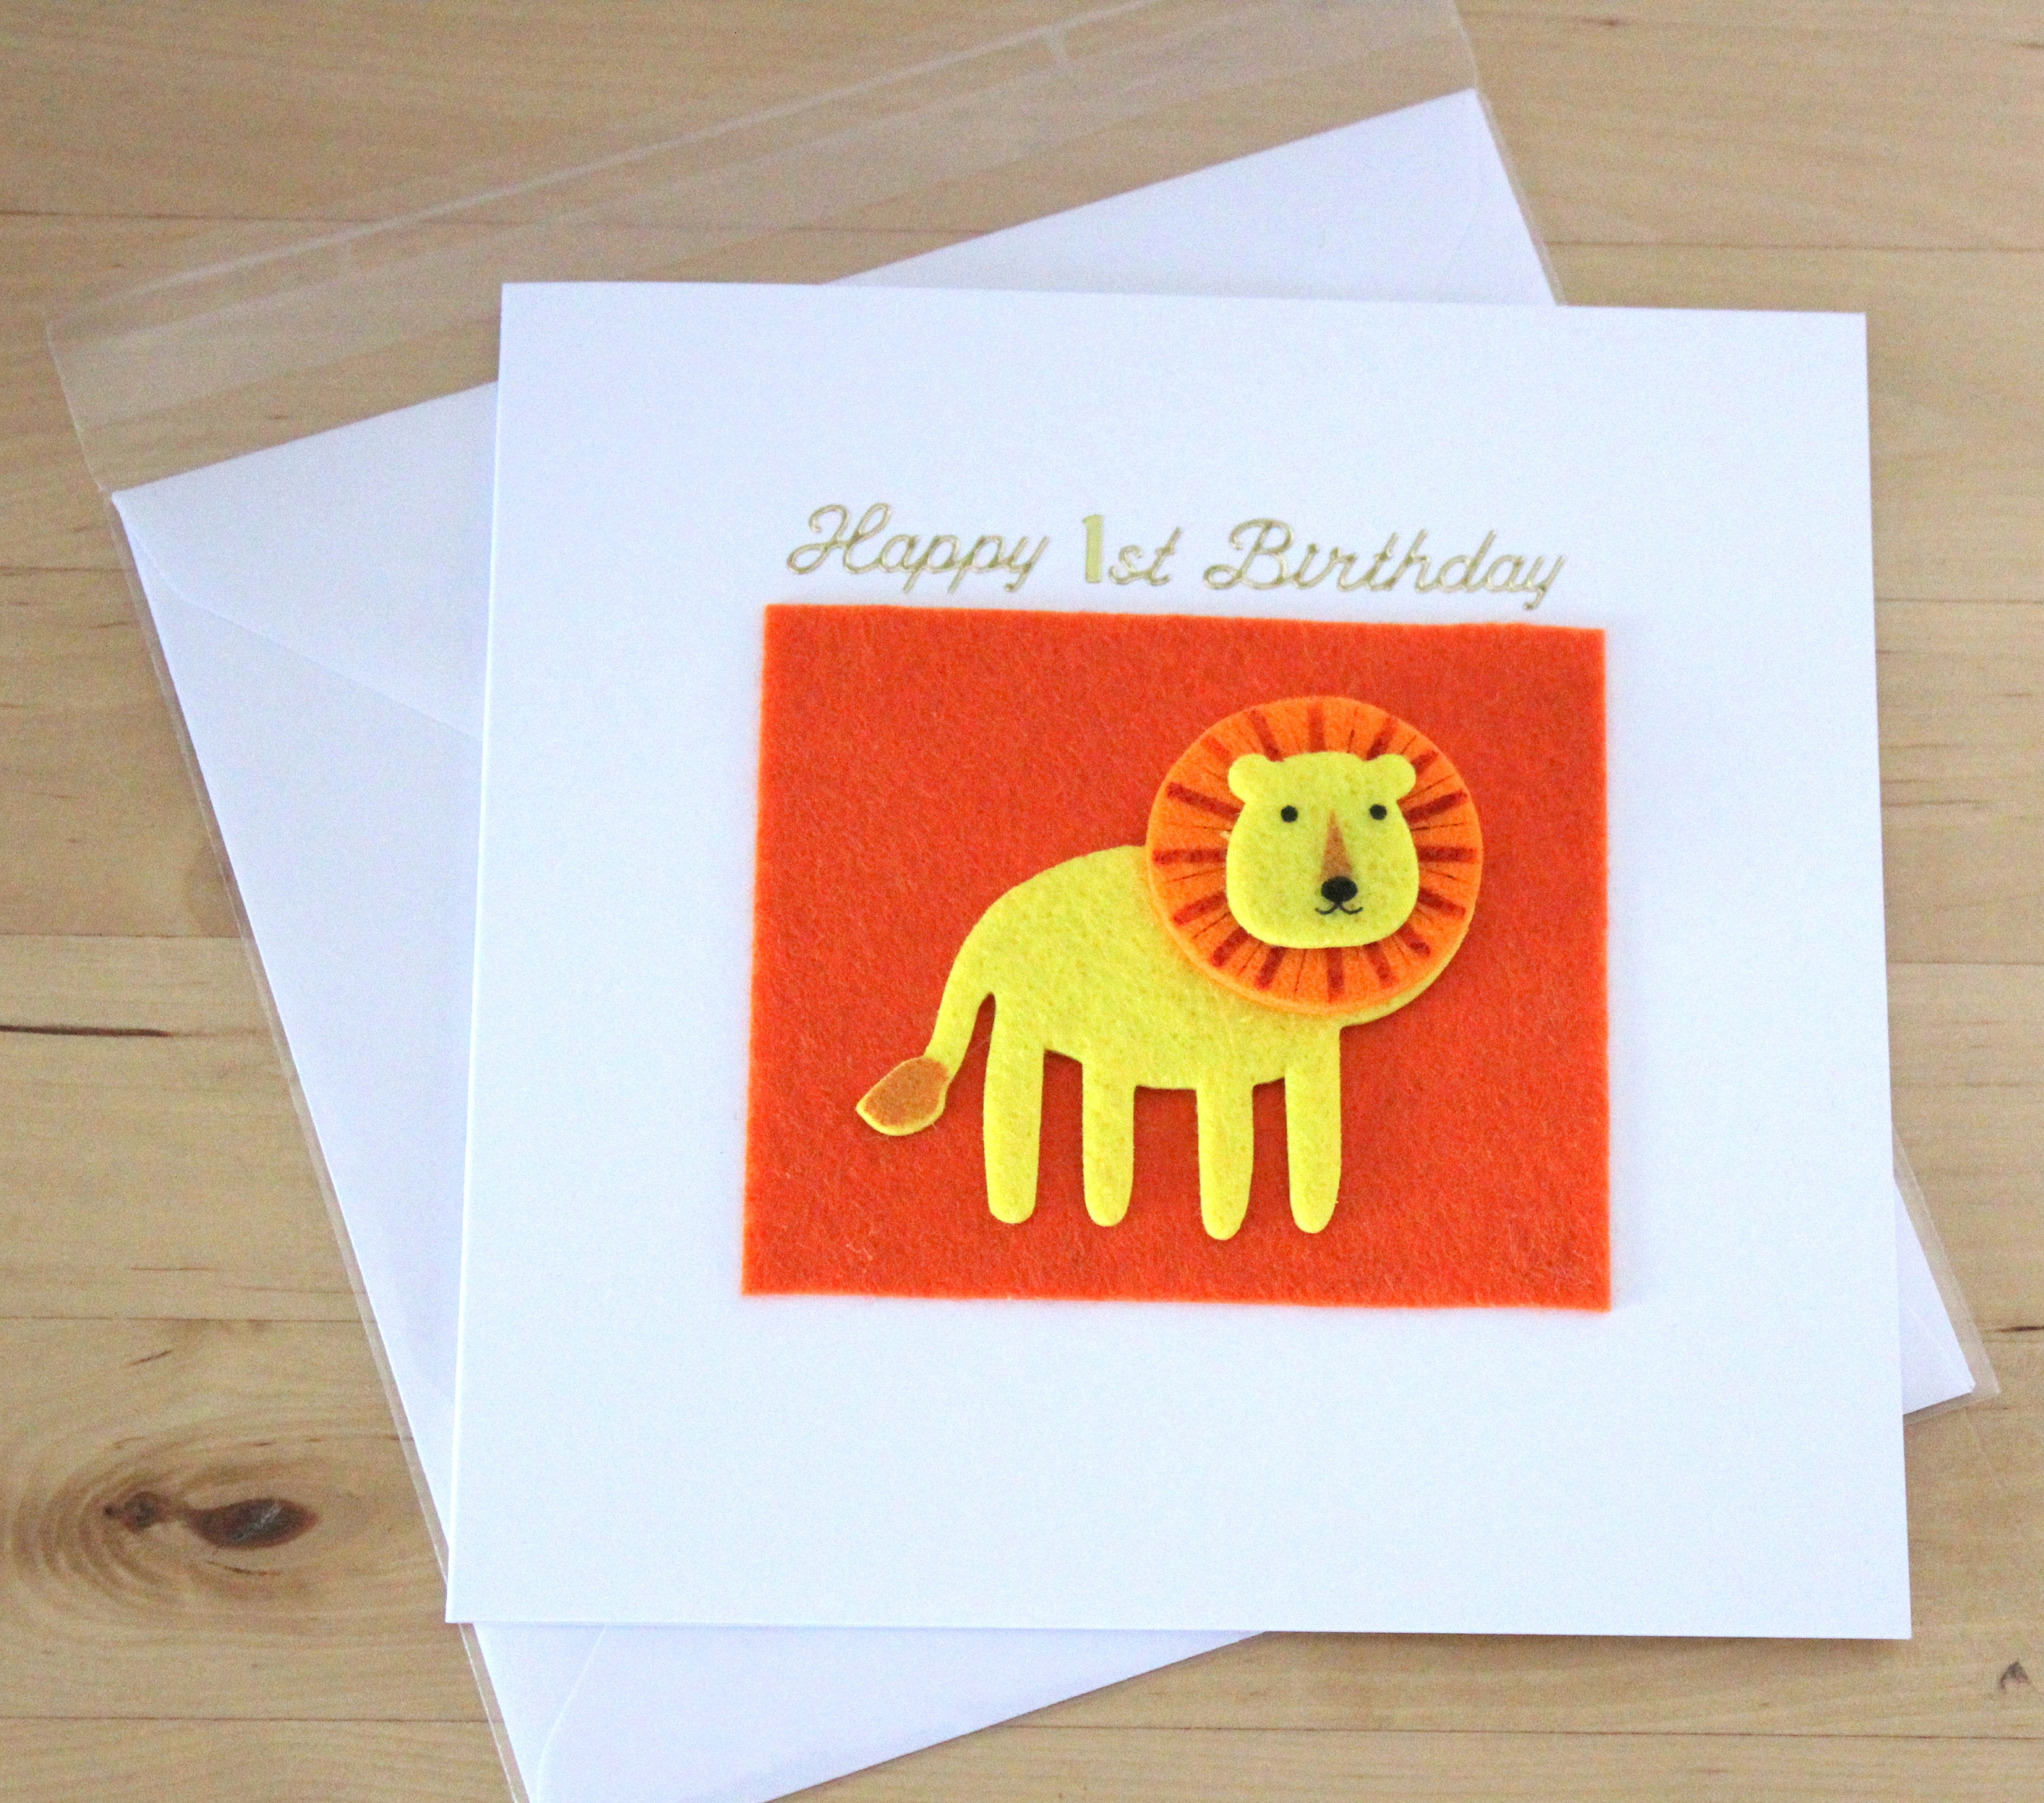 First Birthday Card Ideas Birthday Card Gift For Boy 1st First Birthday Card Boy Lion First 1st Birthday Card Gift Lion Card Lion Cards Lion Birthday Card Gift